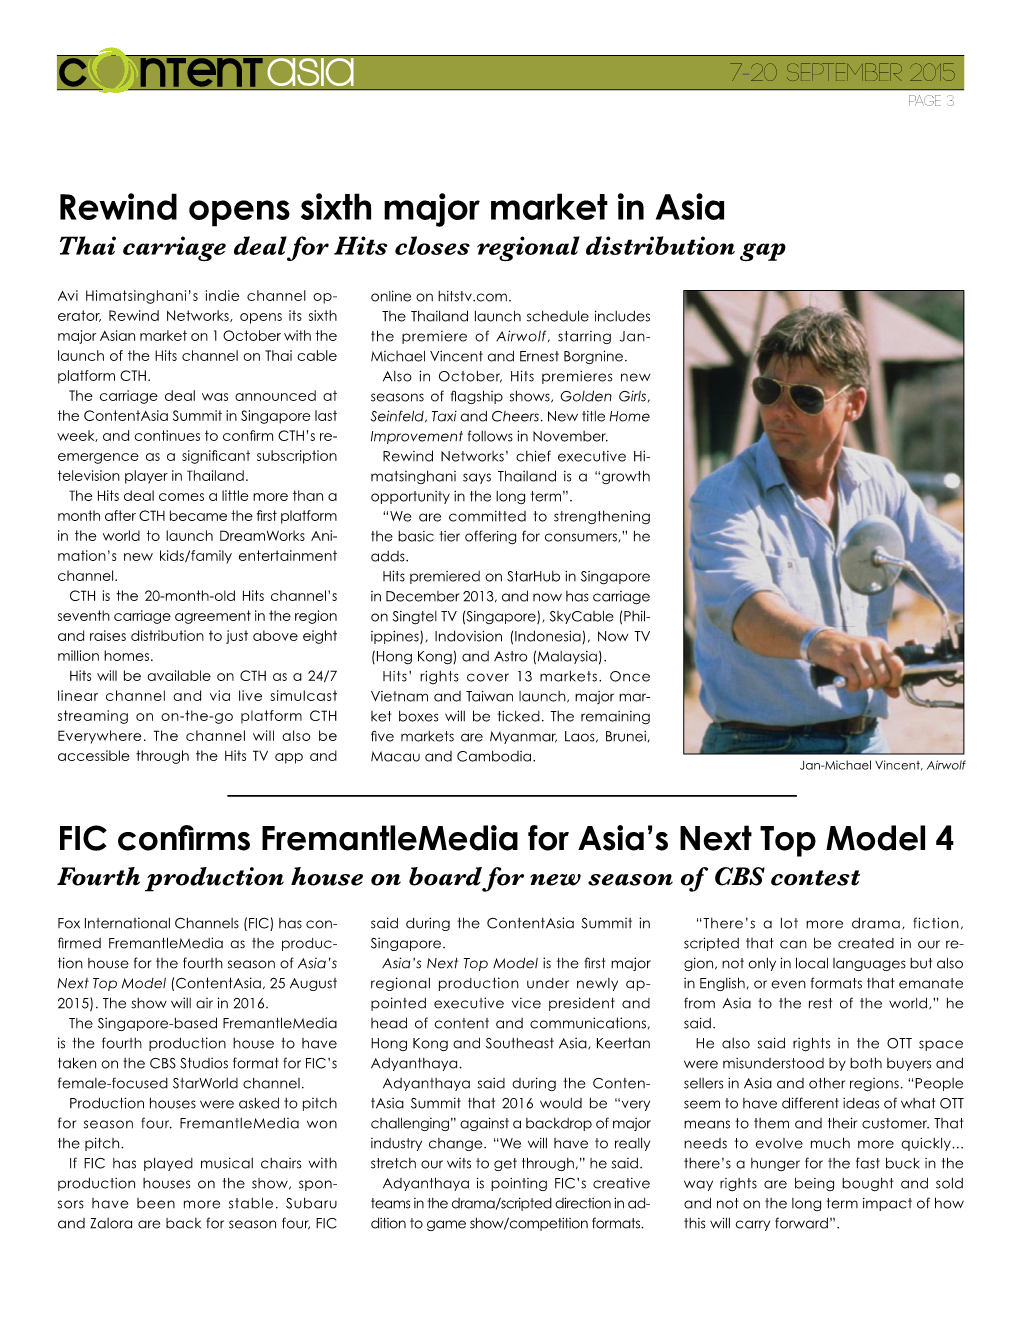 Contentasia Rewind Opens Sixth Major Market in Asia